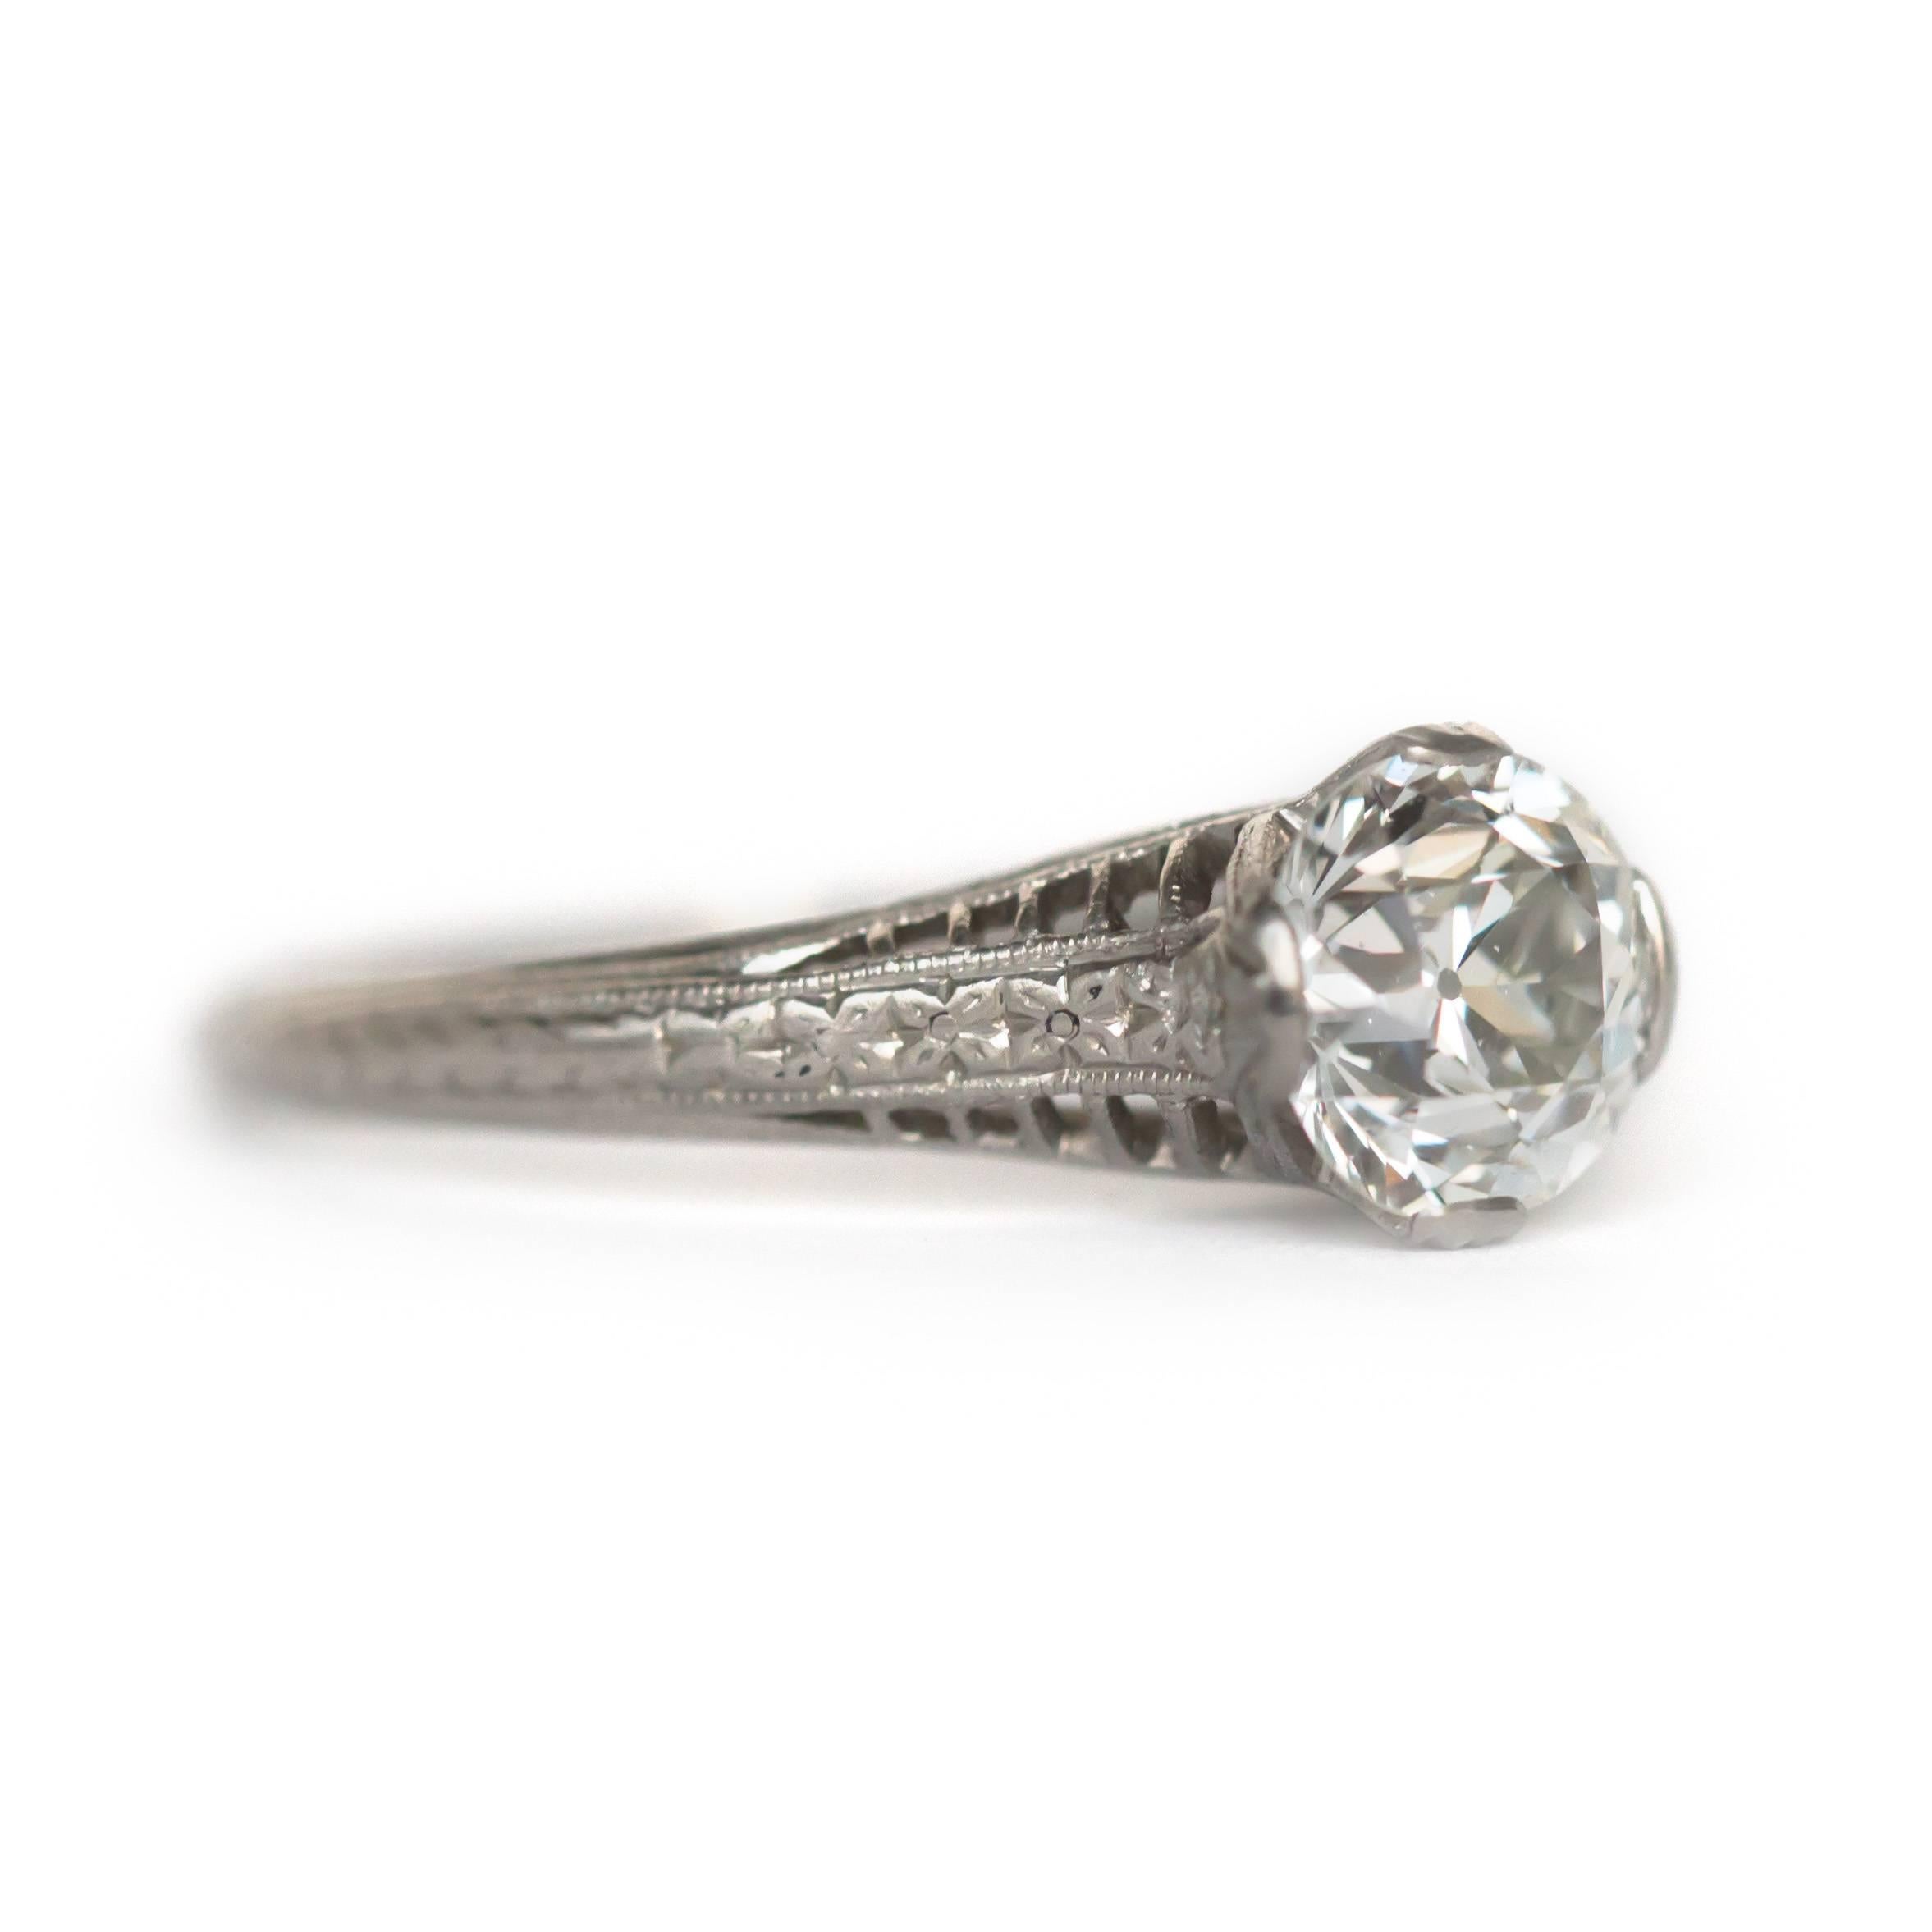 1.08 carat diamond ring